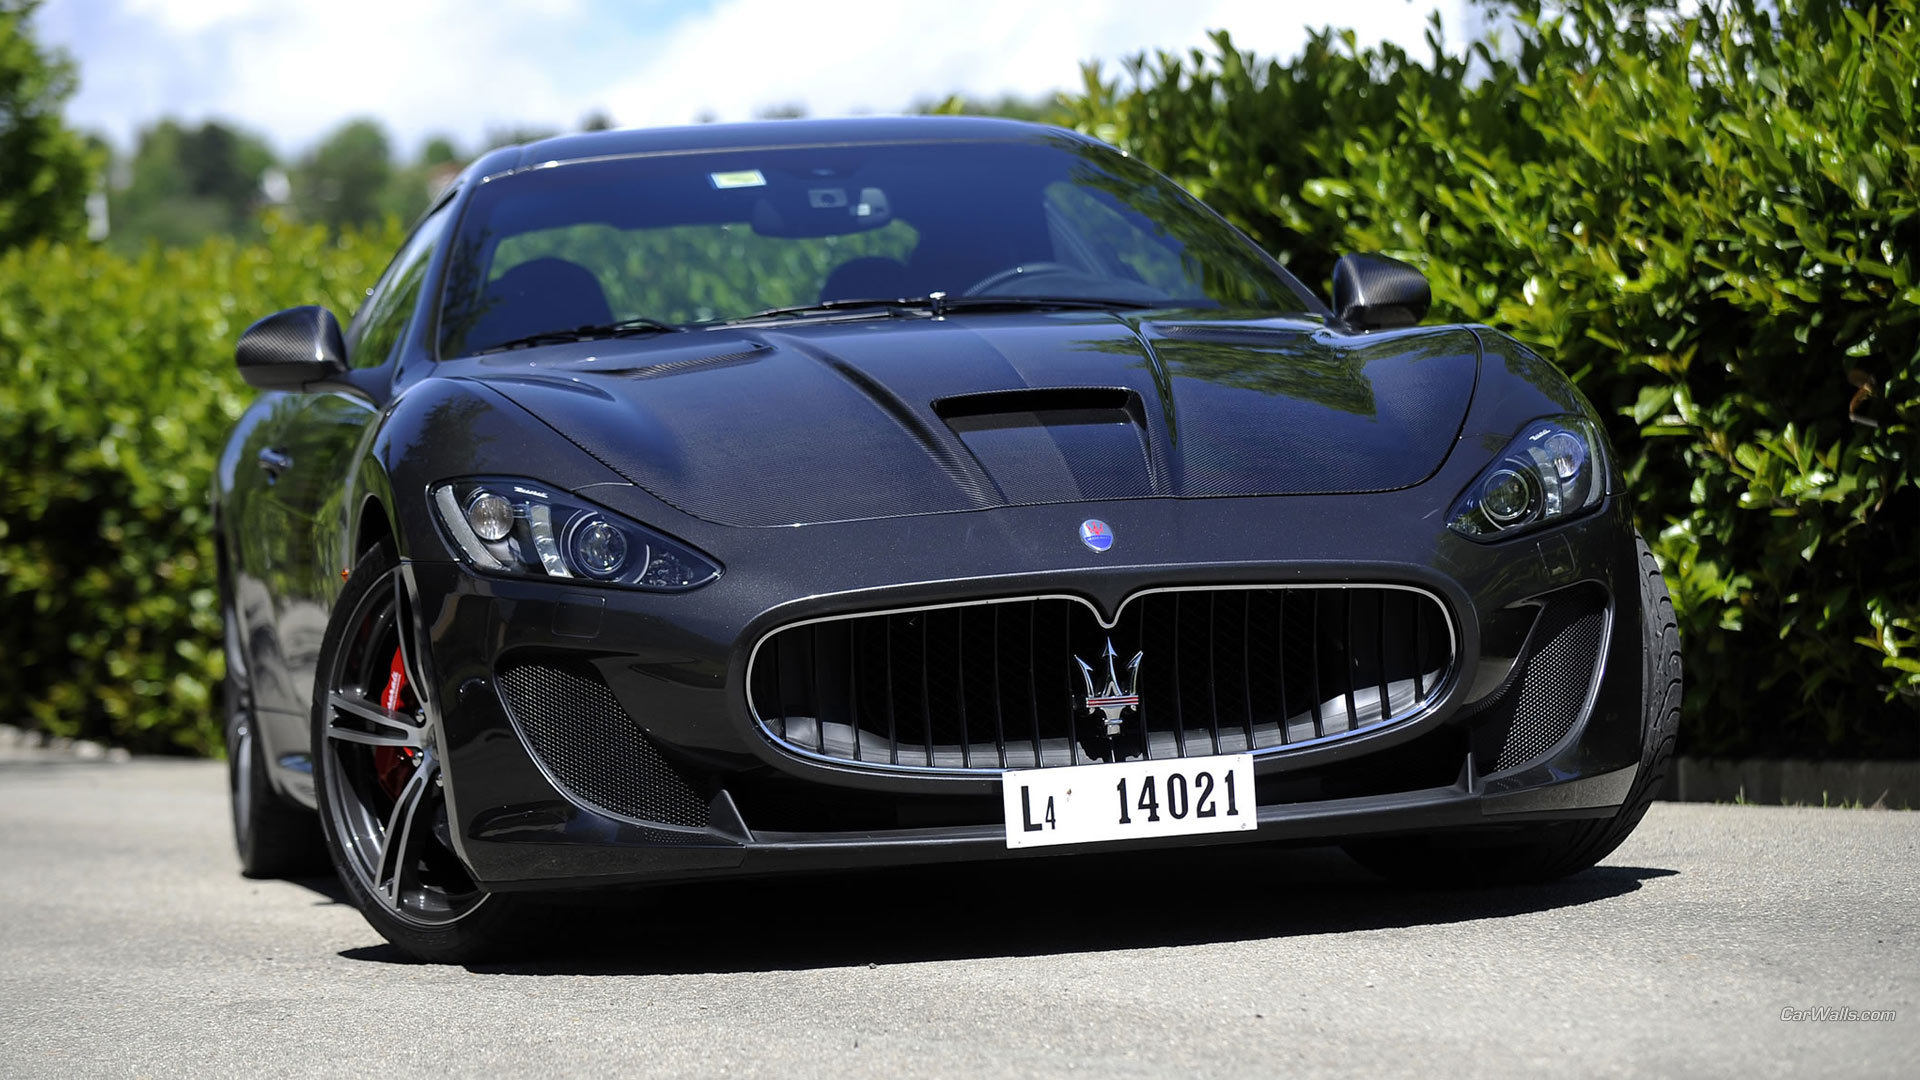 Best Maserati GranTurismo background ID:11034 for High Resolution hd 1080p PC